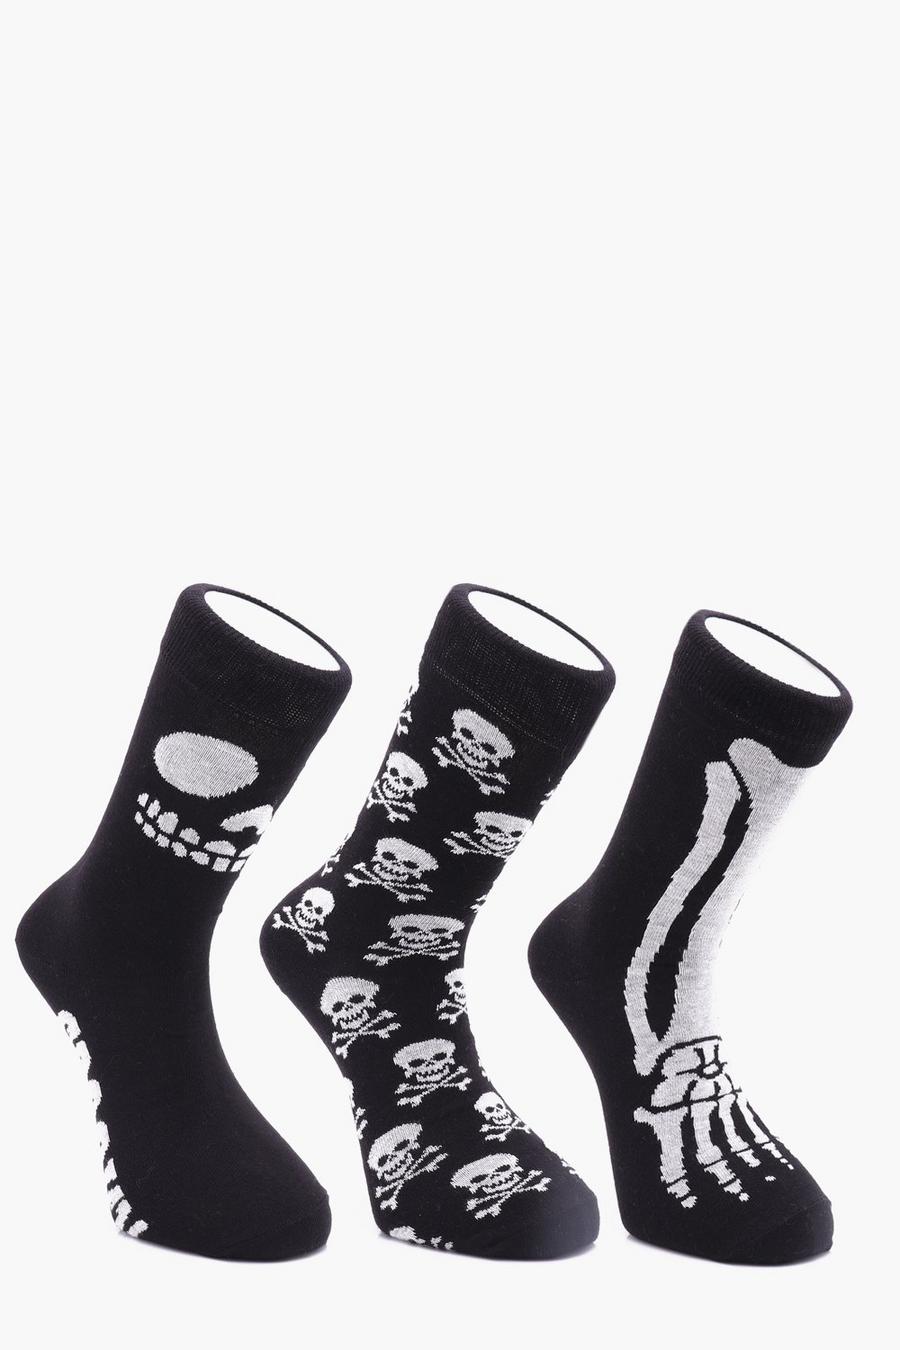 3 Pack Skeleton Halloween Socks, Black image number 1